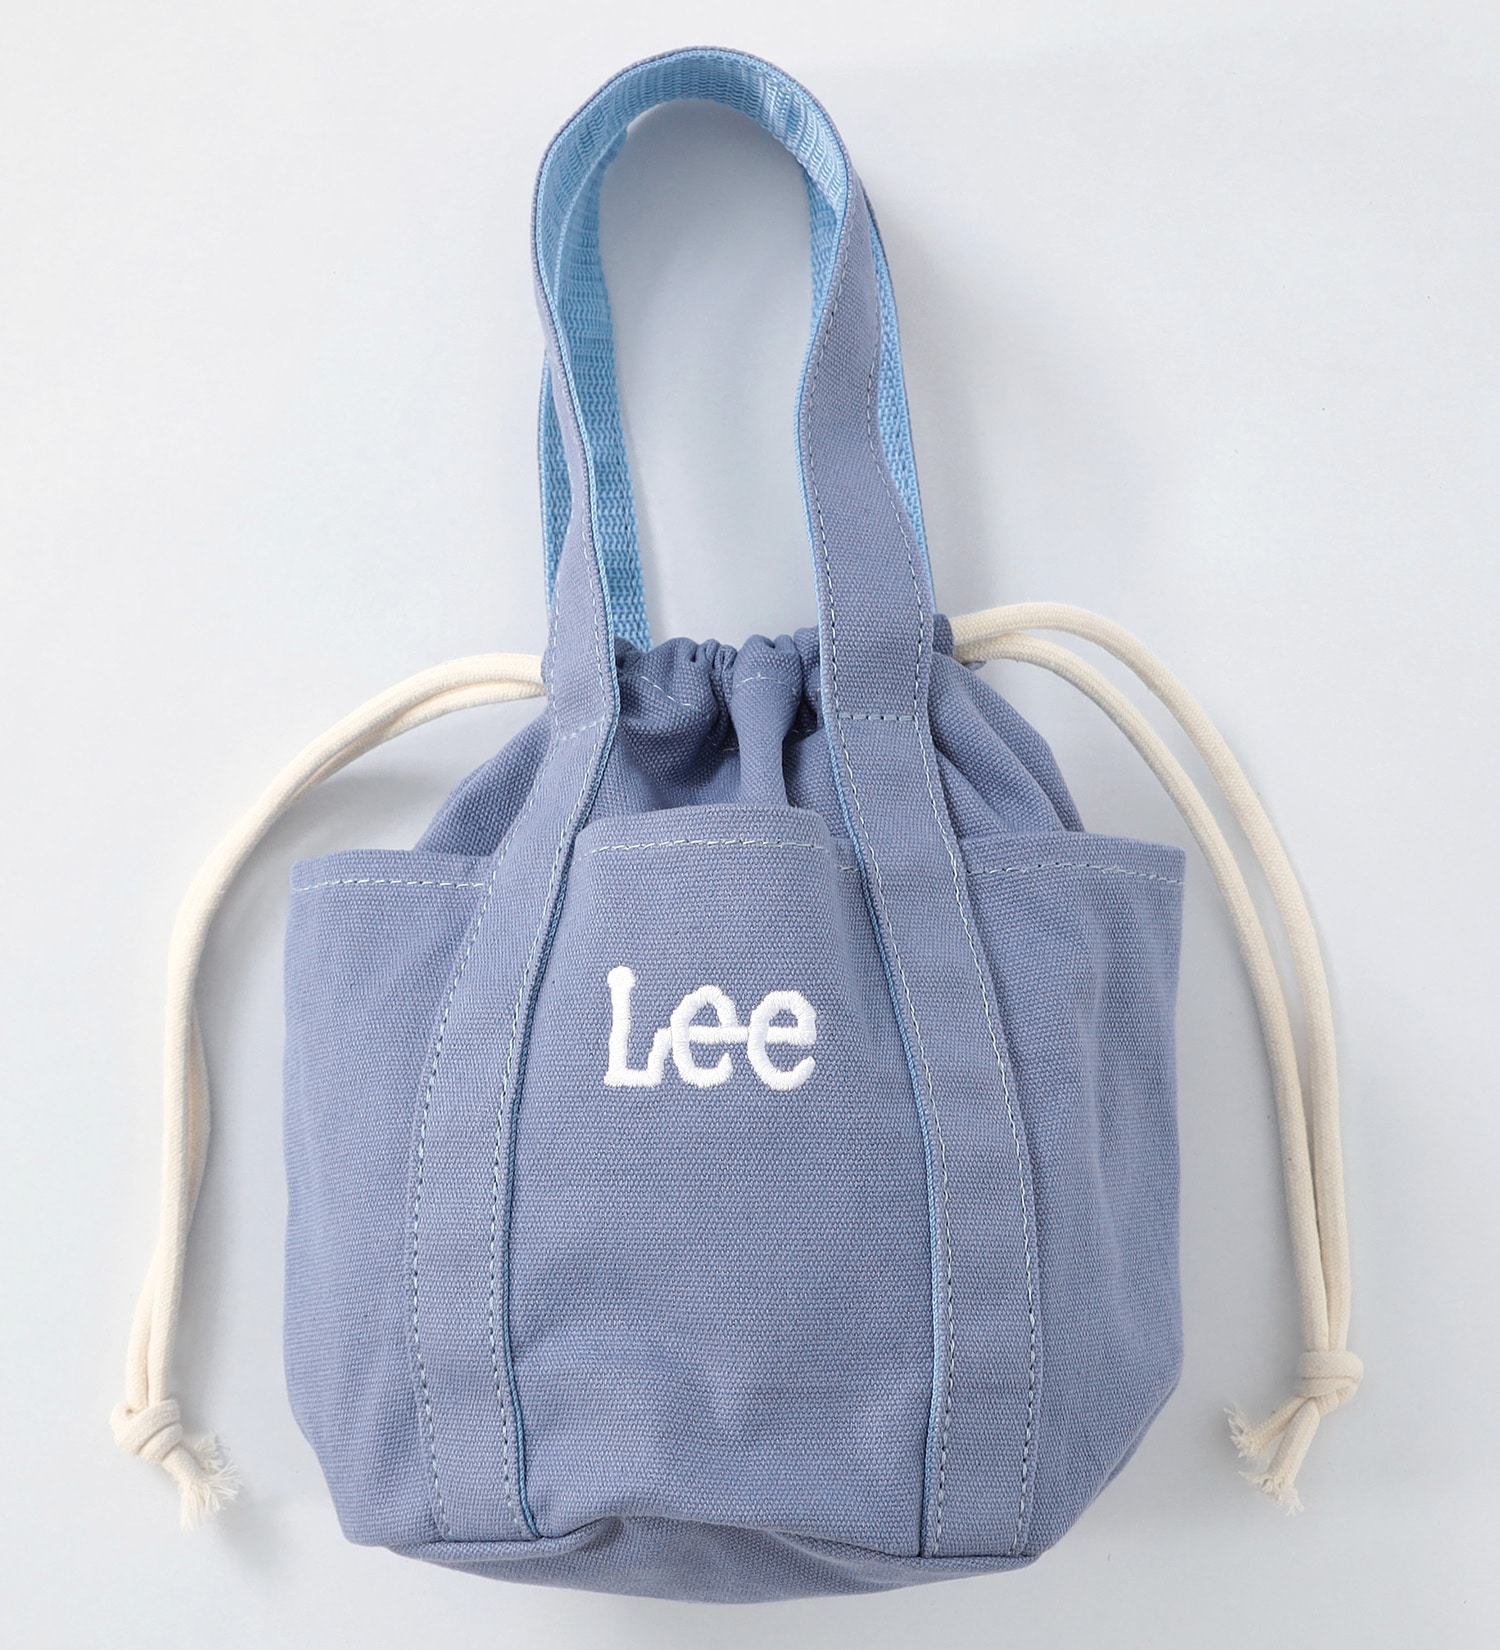 Lee(リー)の【Lee GOLF】巾着カートバッグ|バッグ/その他バッグ/メンズ|パープル